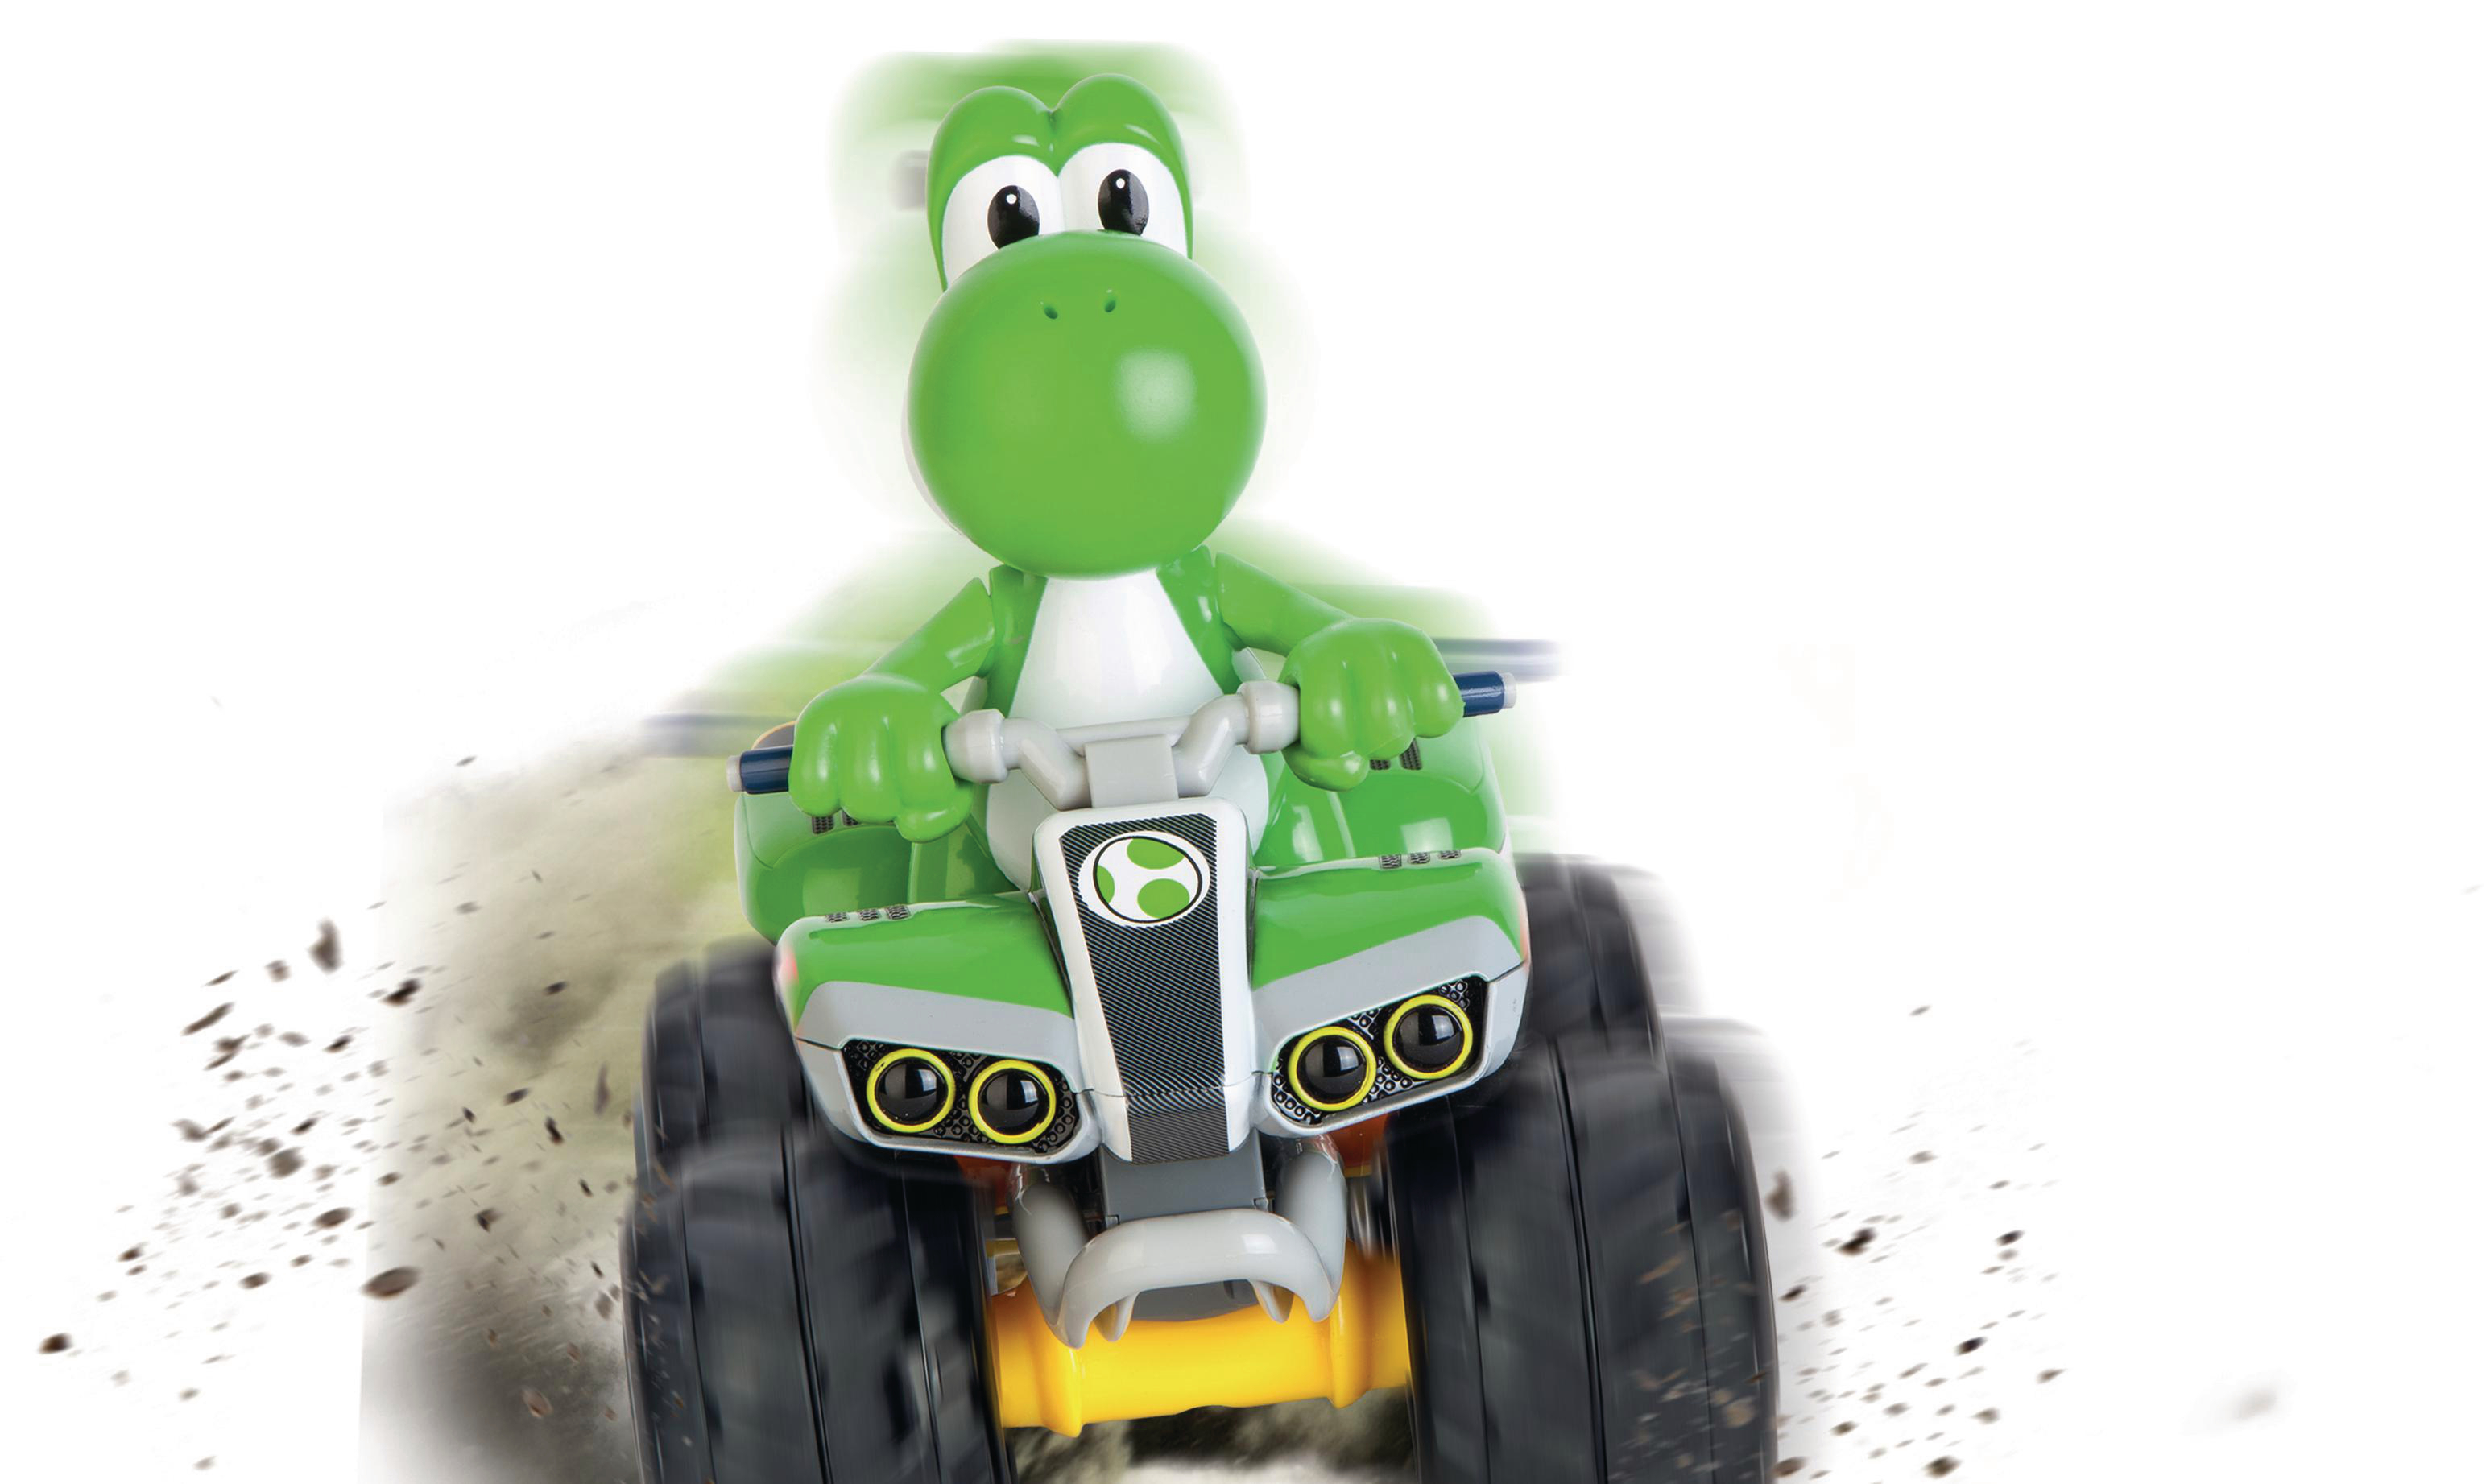 Quad Yoshi Mehrfarbig Mario RC Auto, Kart™, - CARRERA ferngesteuertes 2.4GHz